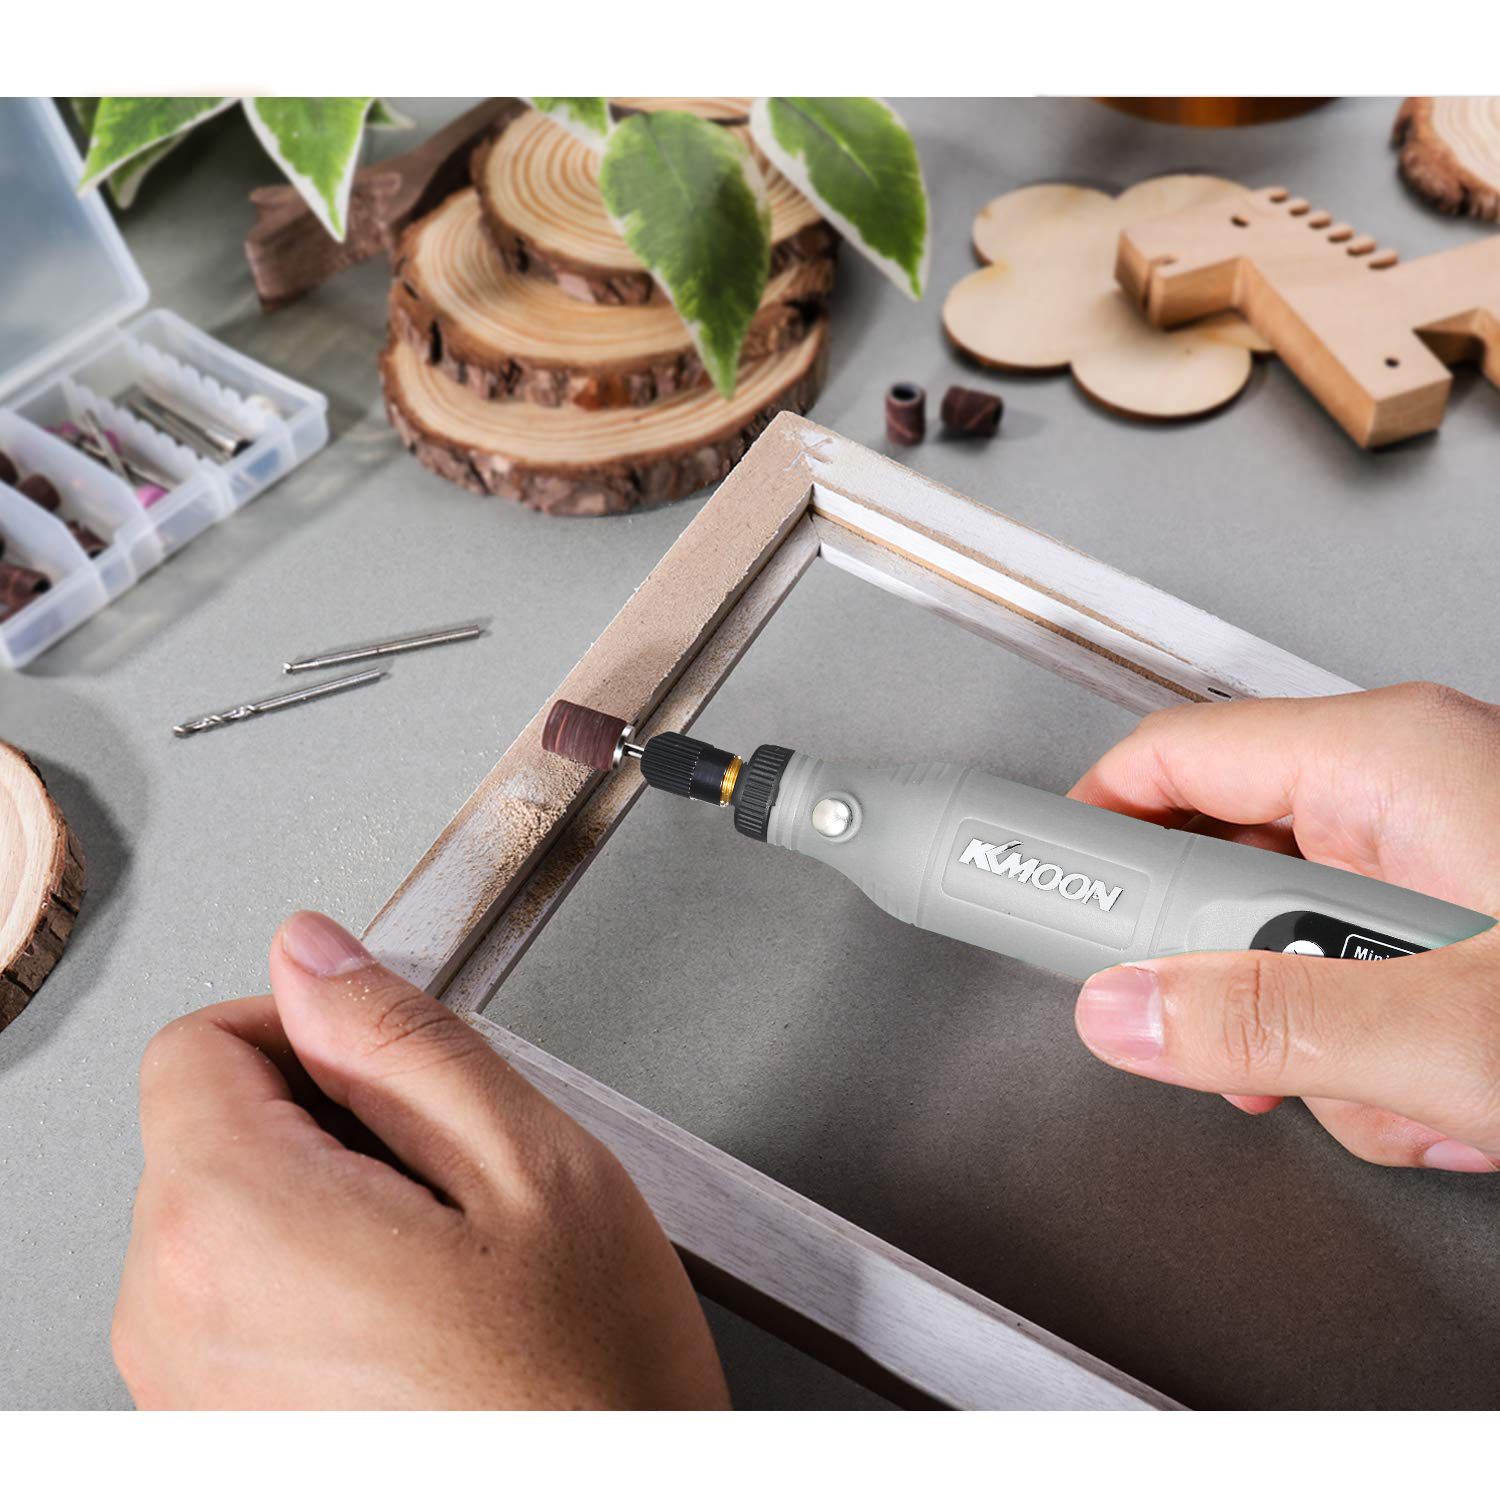 5-Speed Mini Electric Grinder Tool Set USB Charging Grinding Machine for Jade Carving Wood Punching Metal Grinding Polishing